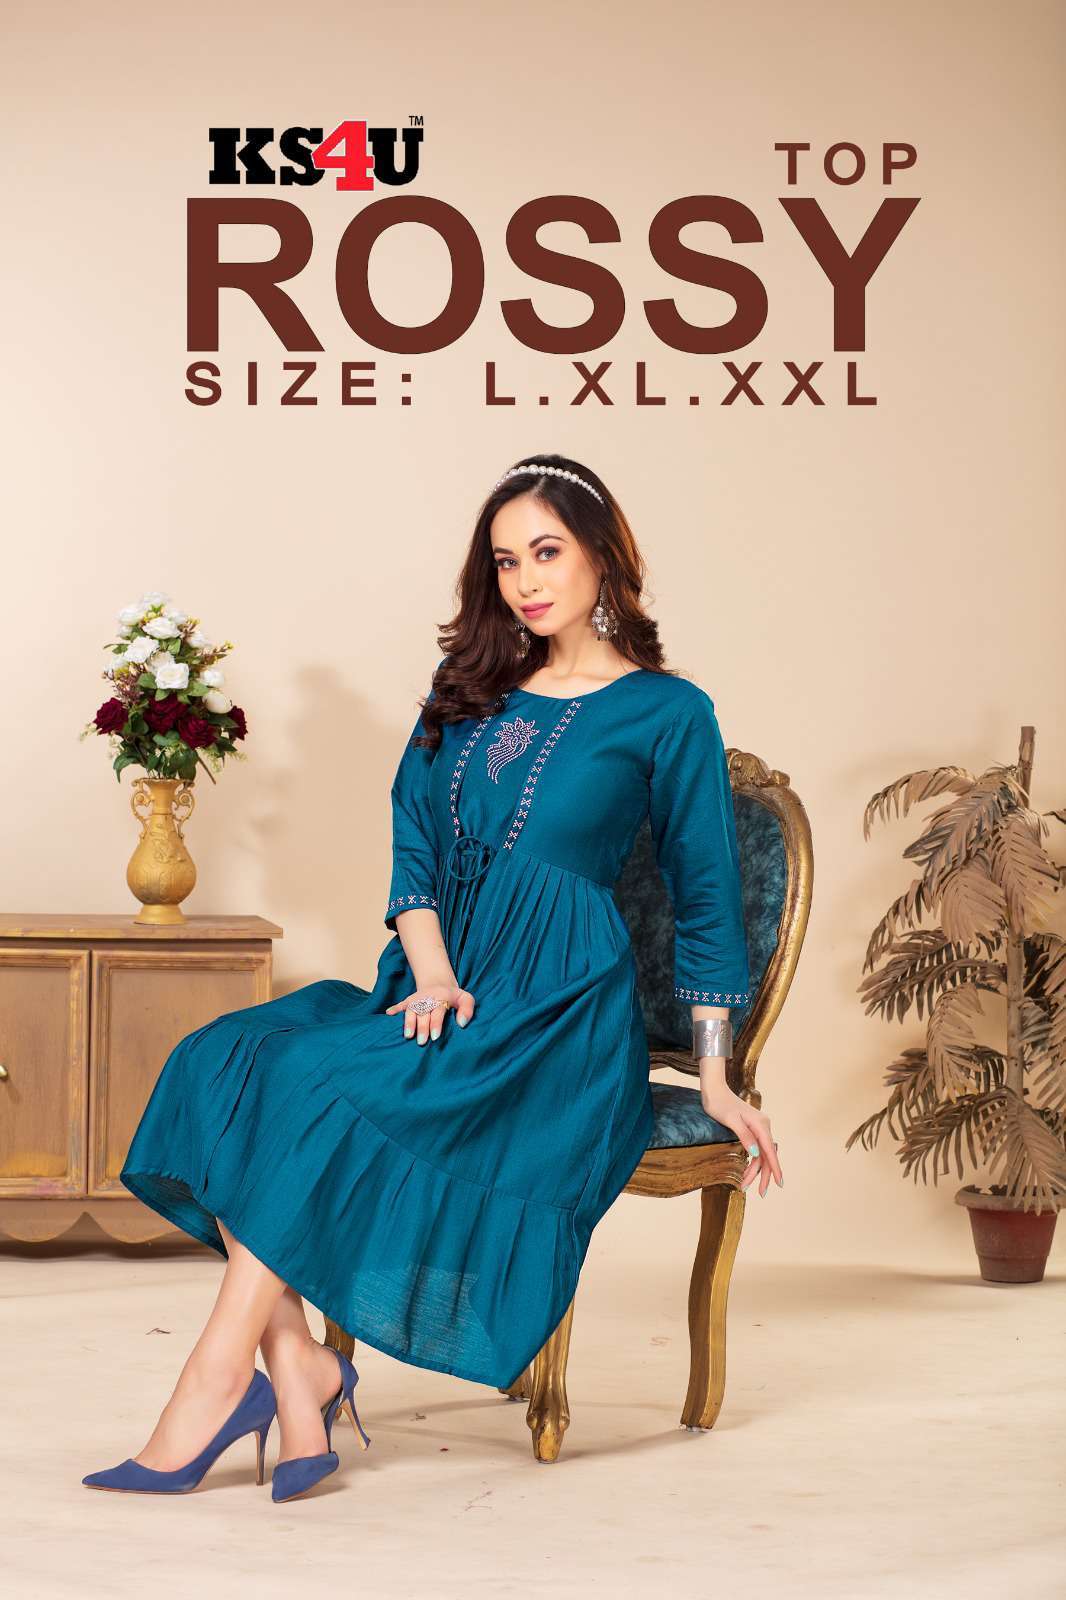 KS4U Rossy New Designs Ethnic Wear Designer Kurti Catalog Exporters